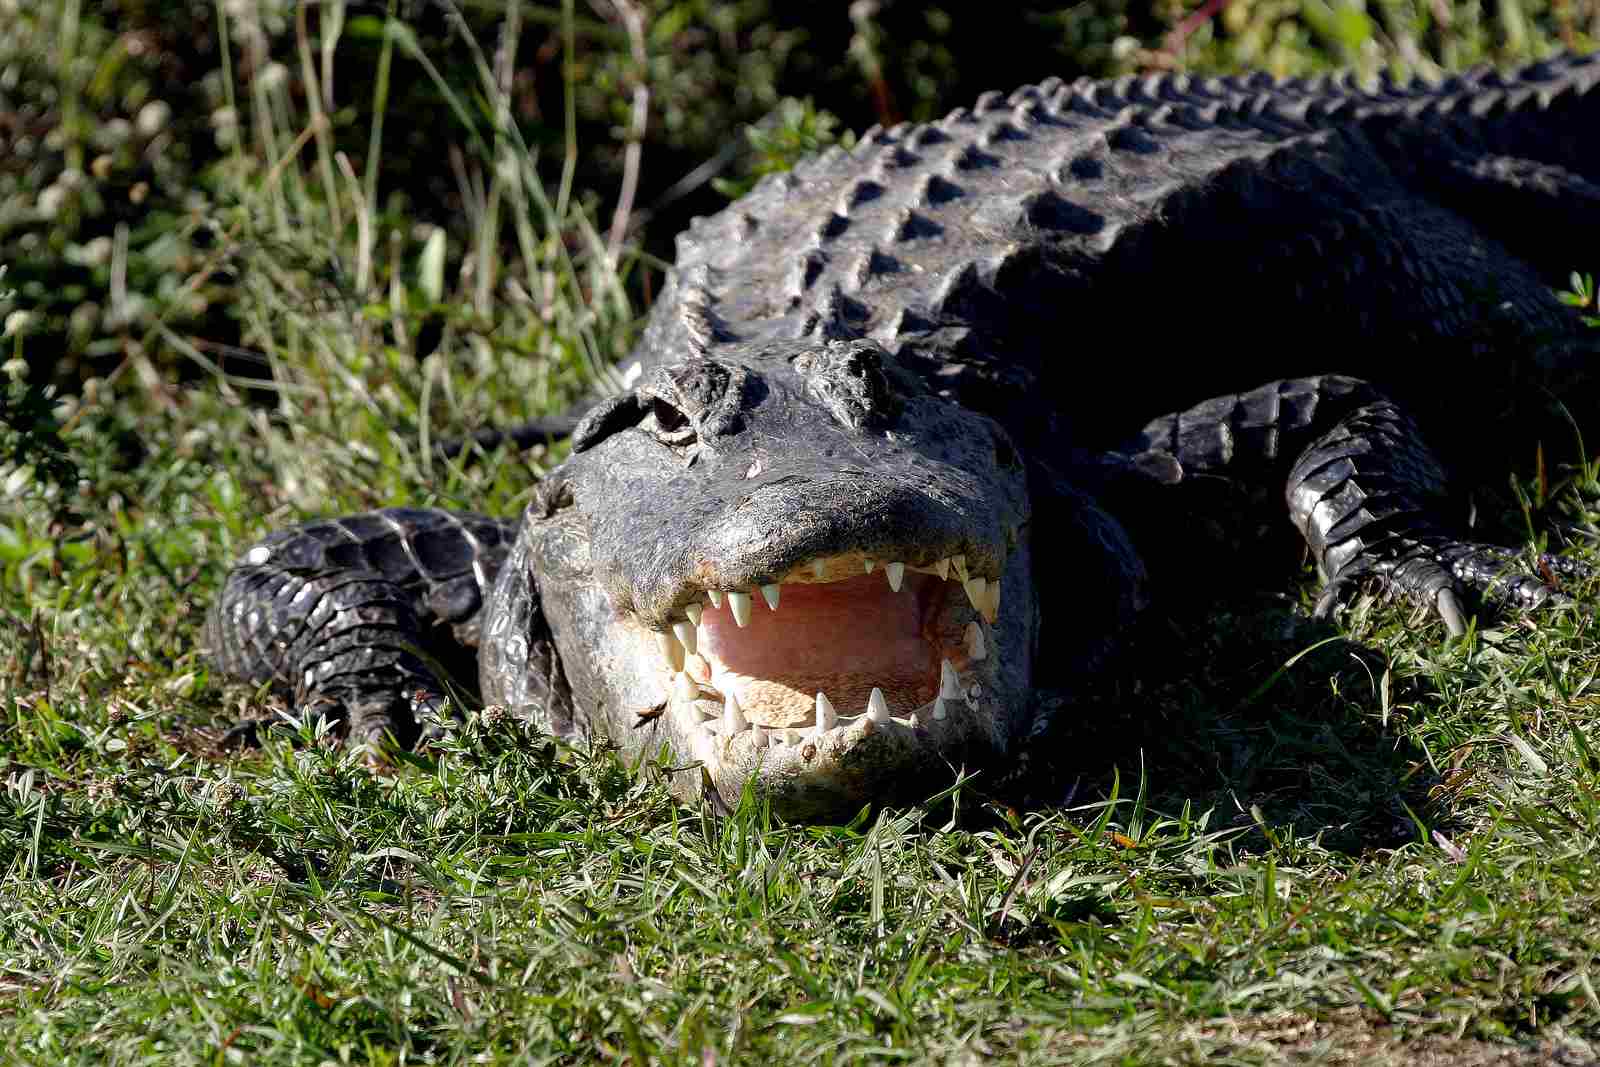 American alligator vs saltwater crocodile